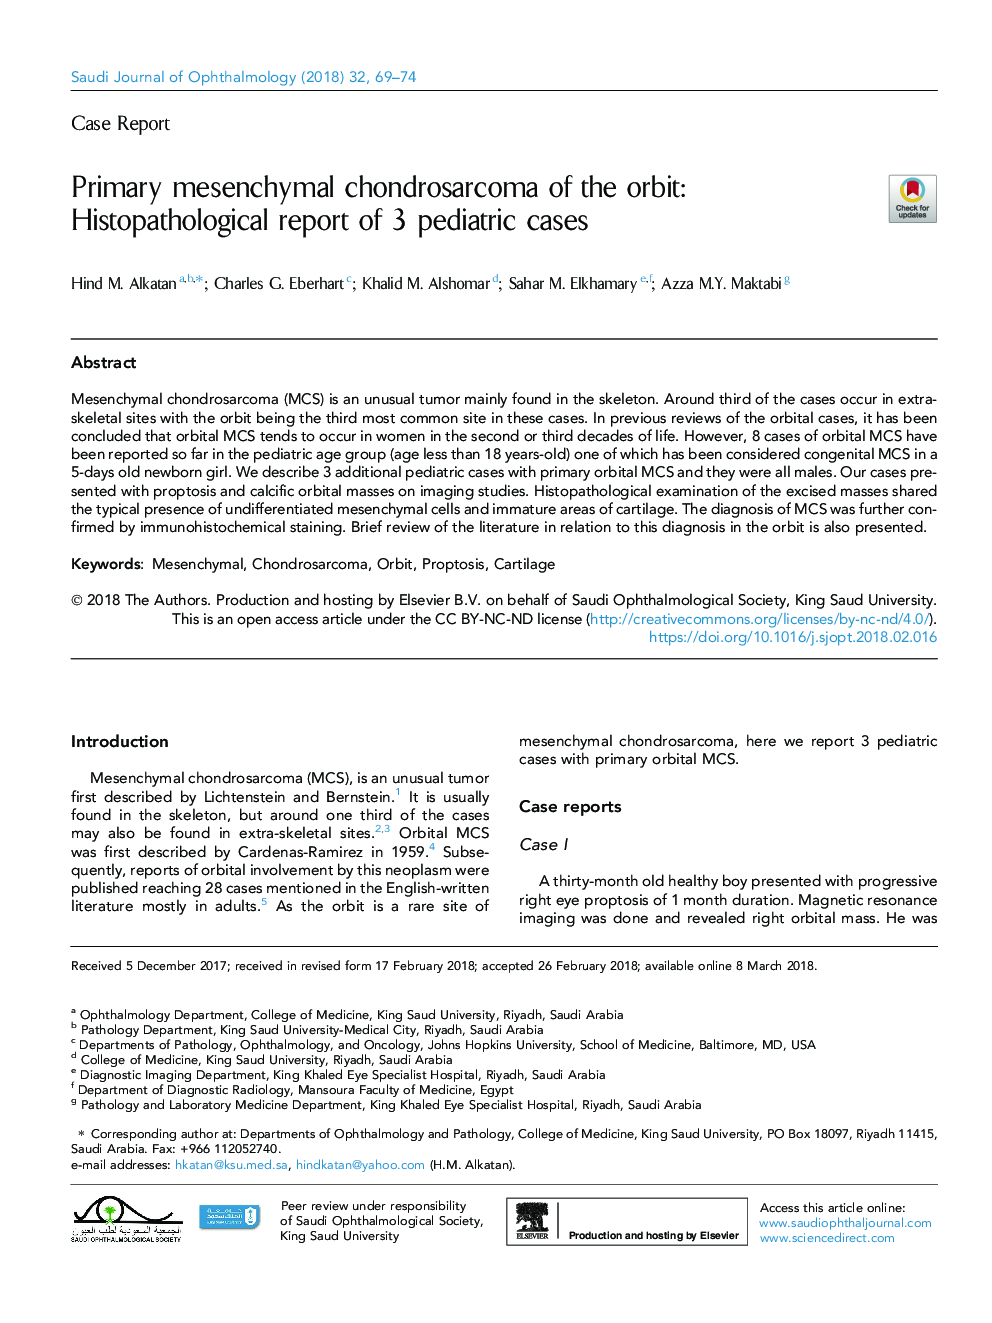 Primary mesenchymal chondrosarcoma of the orbit: Histopathological report of 3 pediatric cases